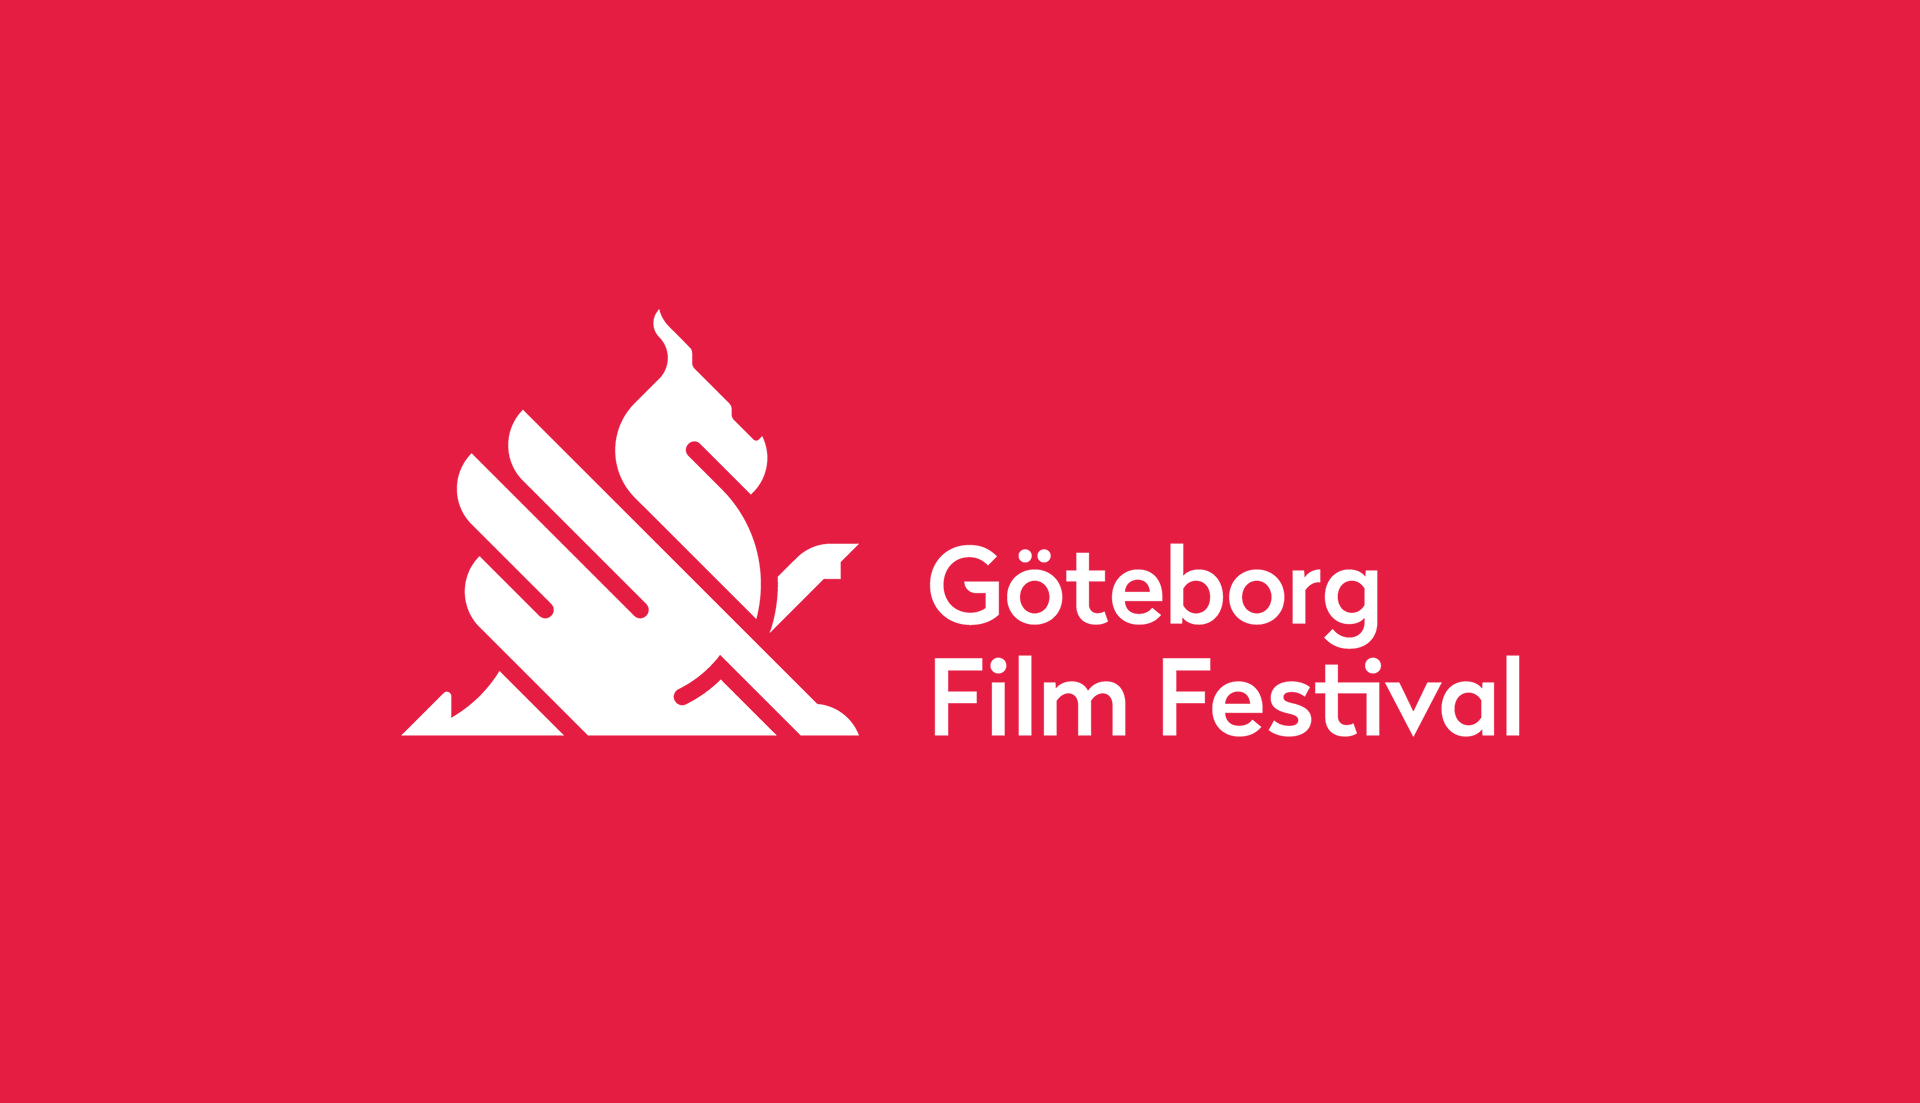 Ota selvää 56+ imagen göteborg film festival